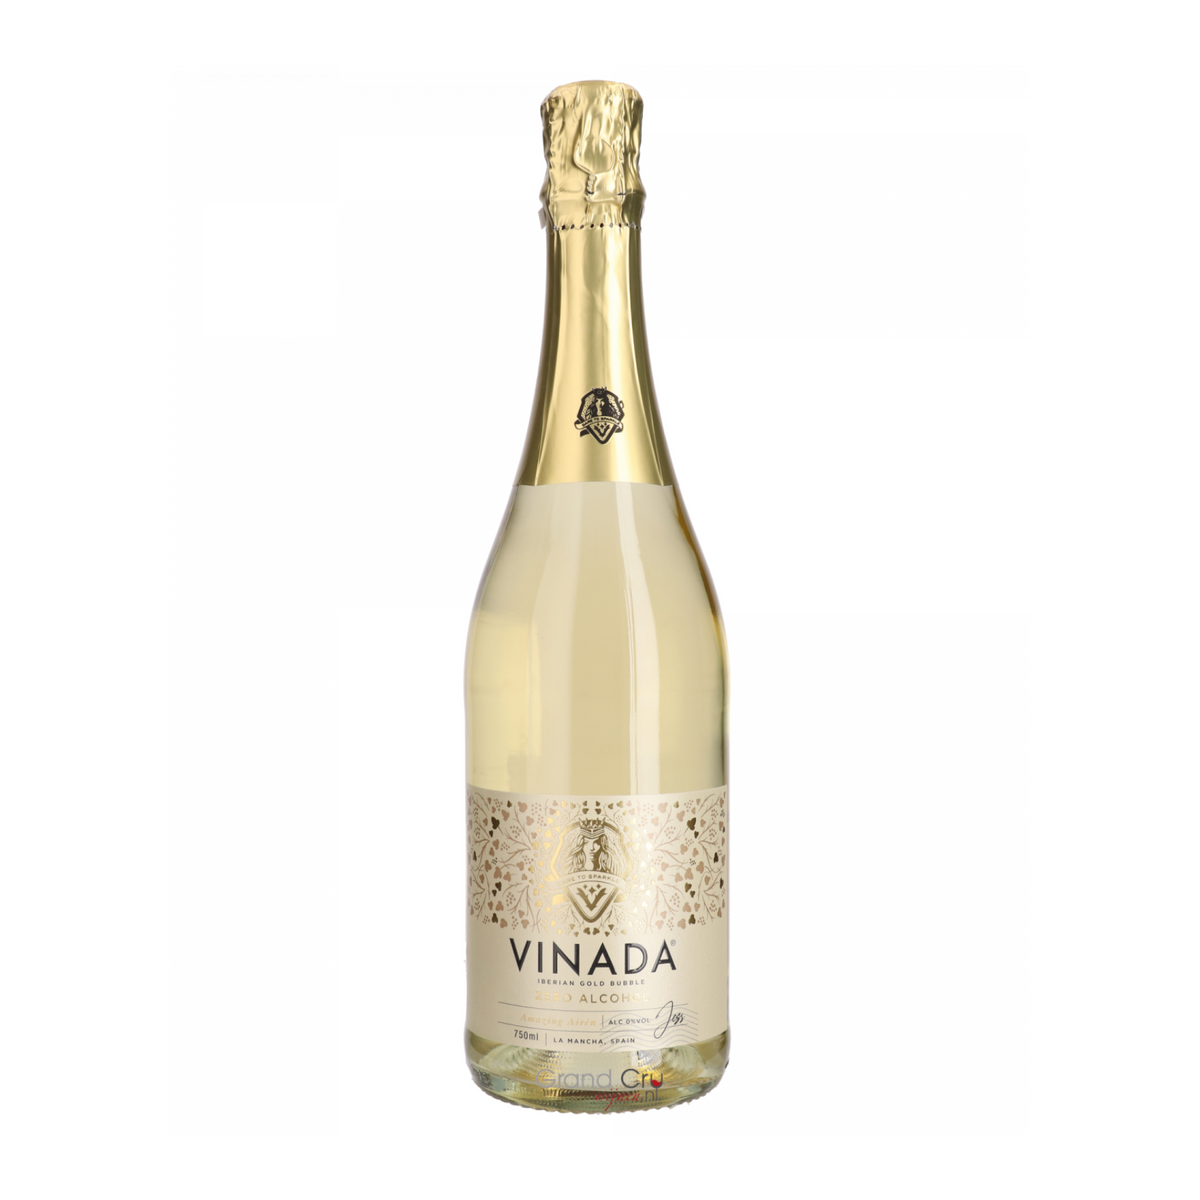 VINADA Amazing Airen Sparkling Wine | Dealcoholized